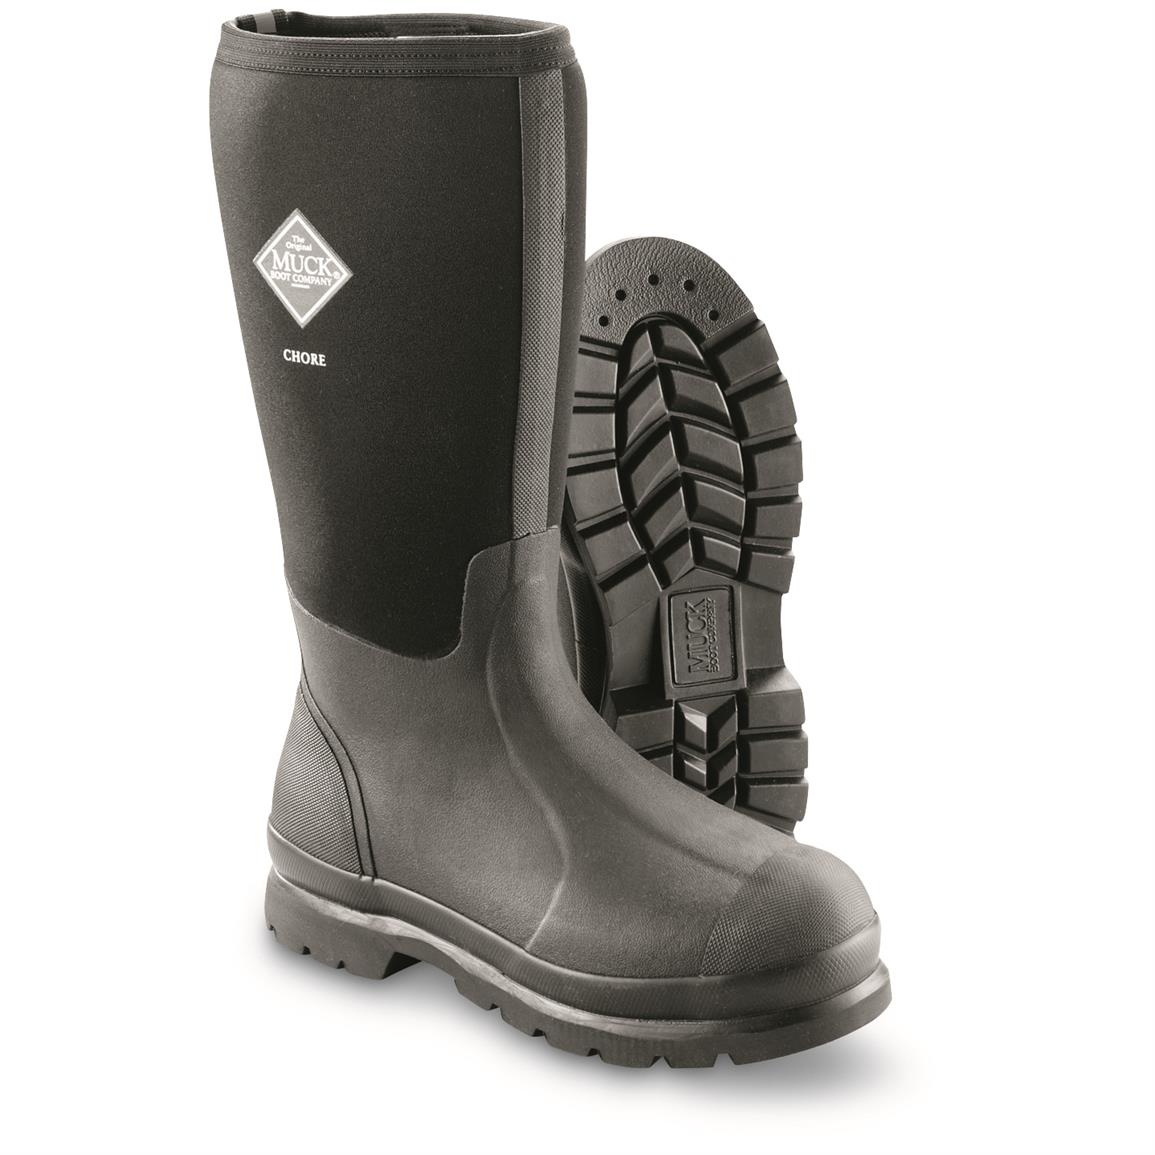 muck boots men's chore mid waterproof work boots